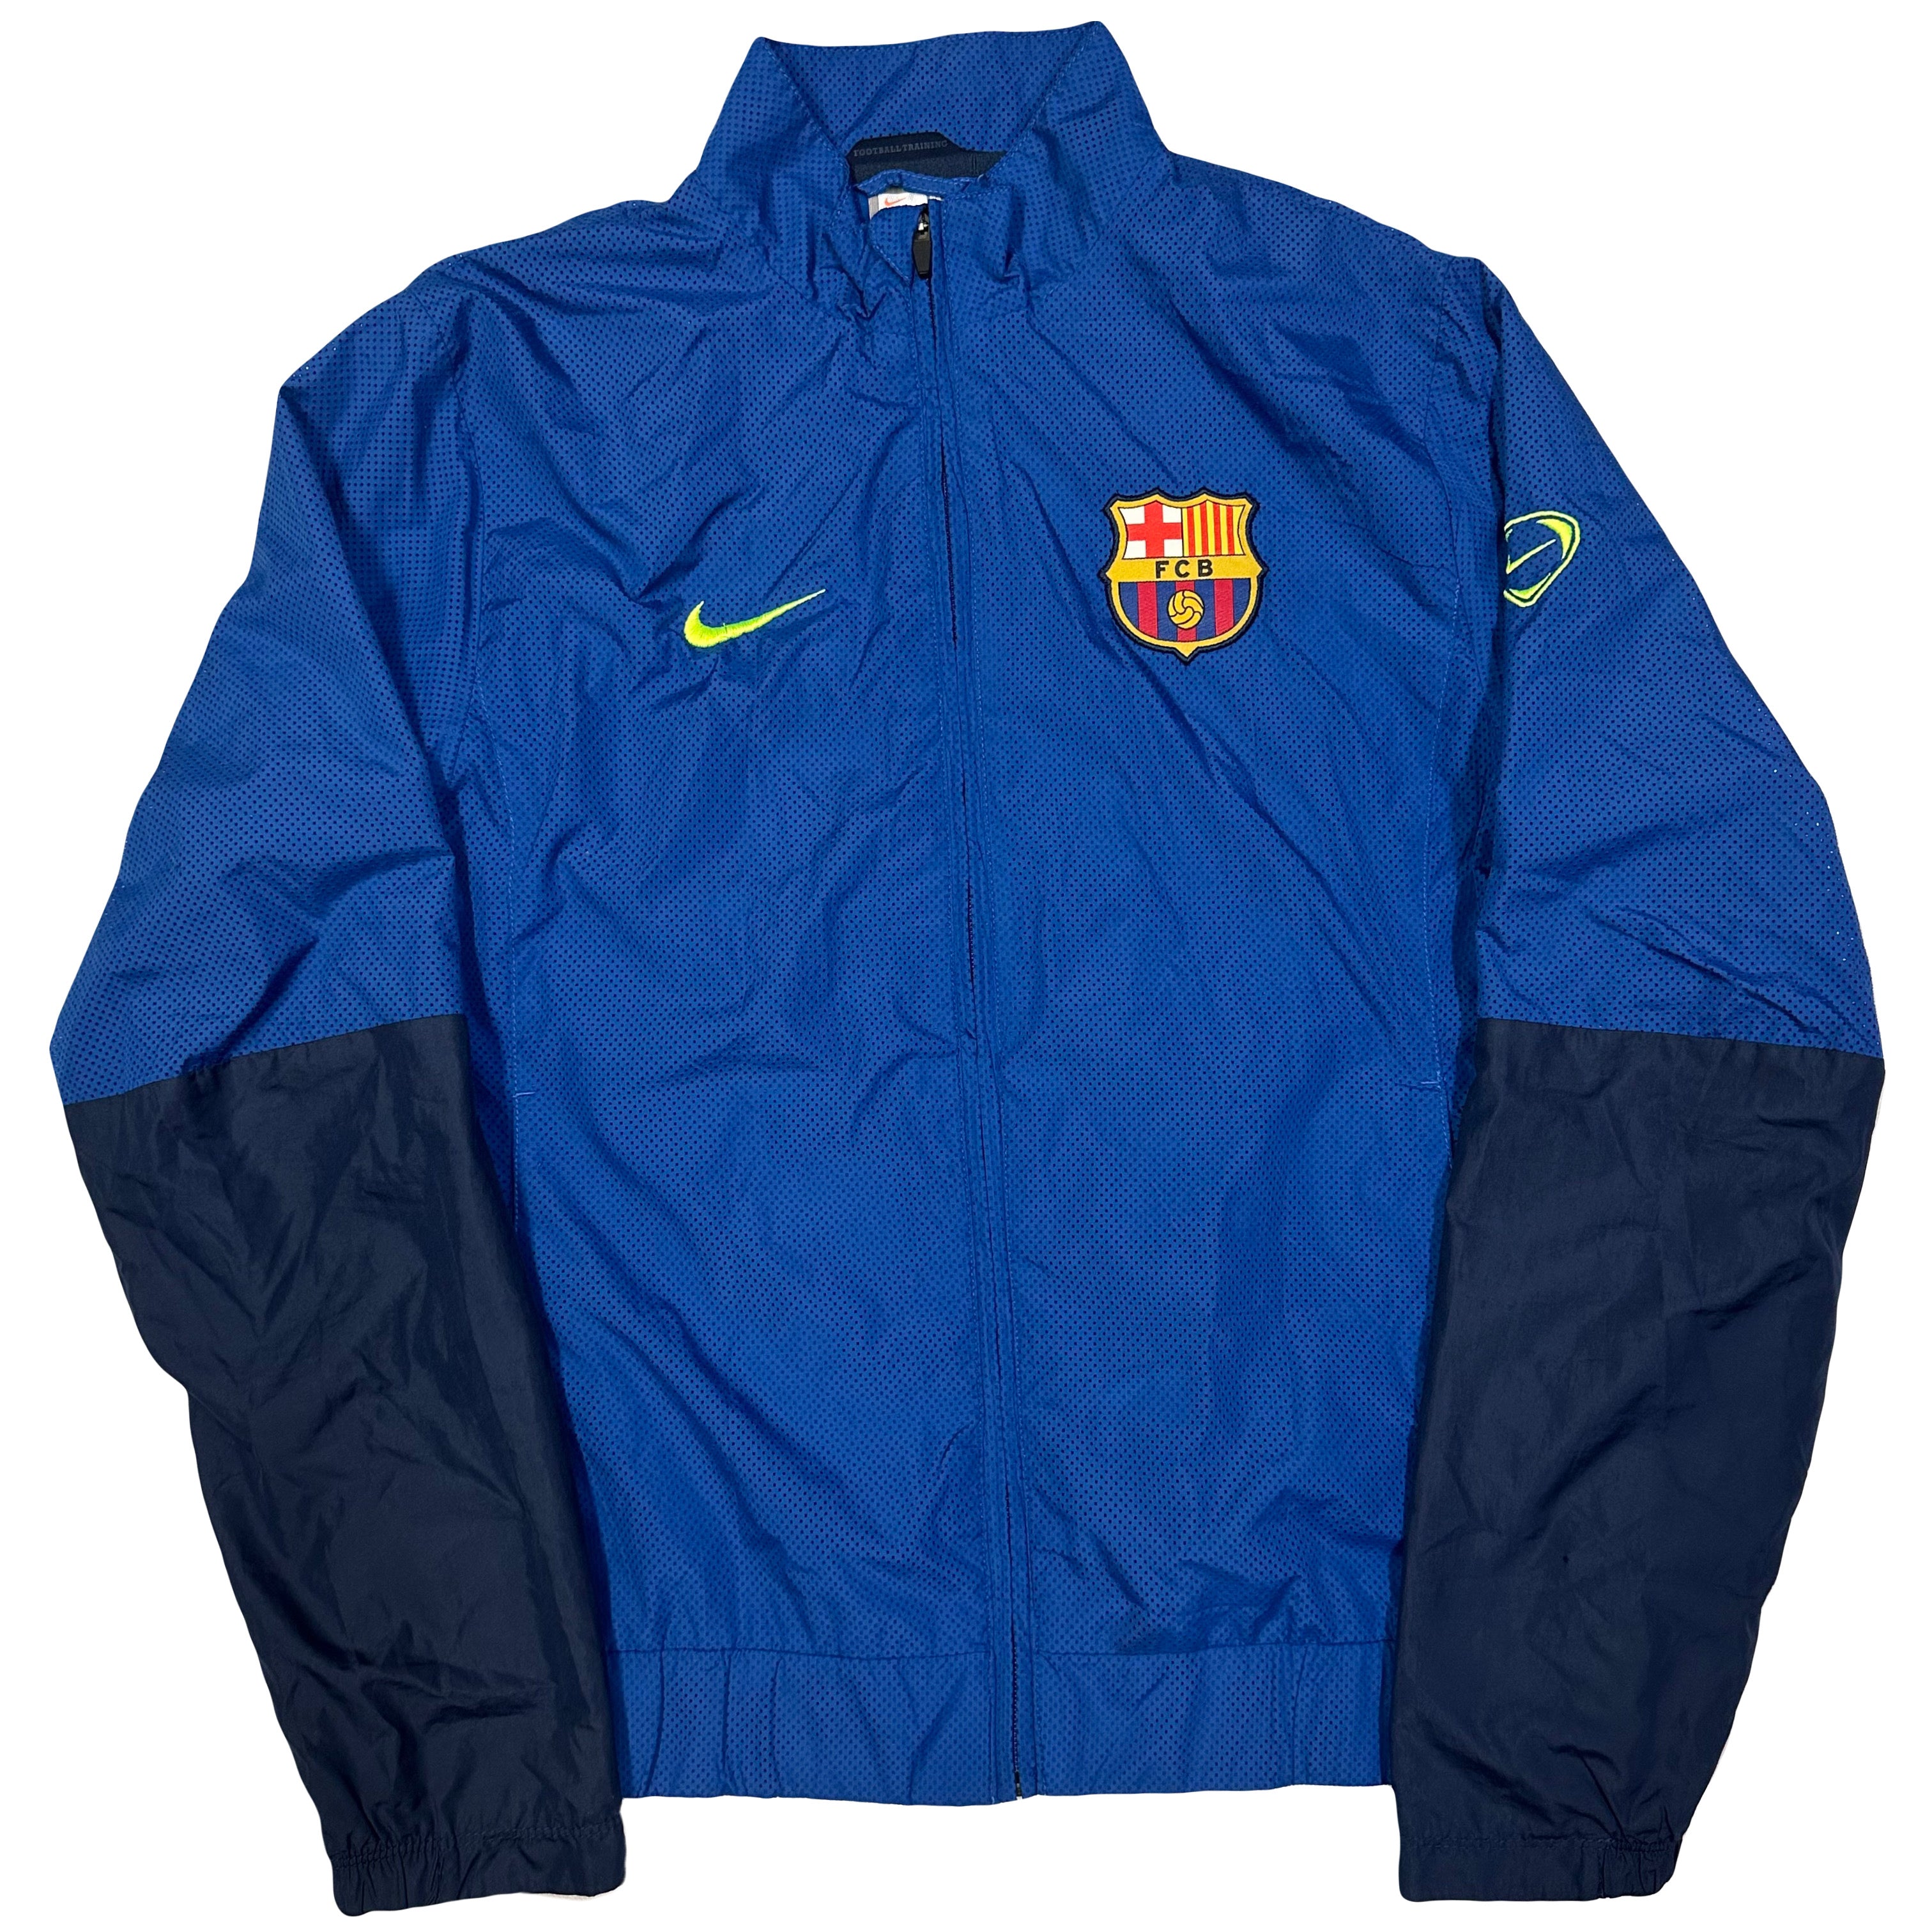 Nike Barcelona 2009/10 Tracksuit Top In Blue ( L )